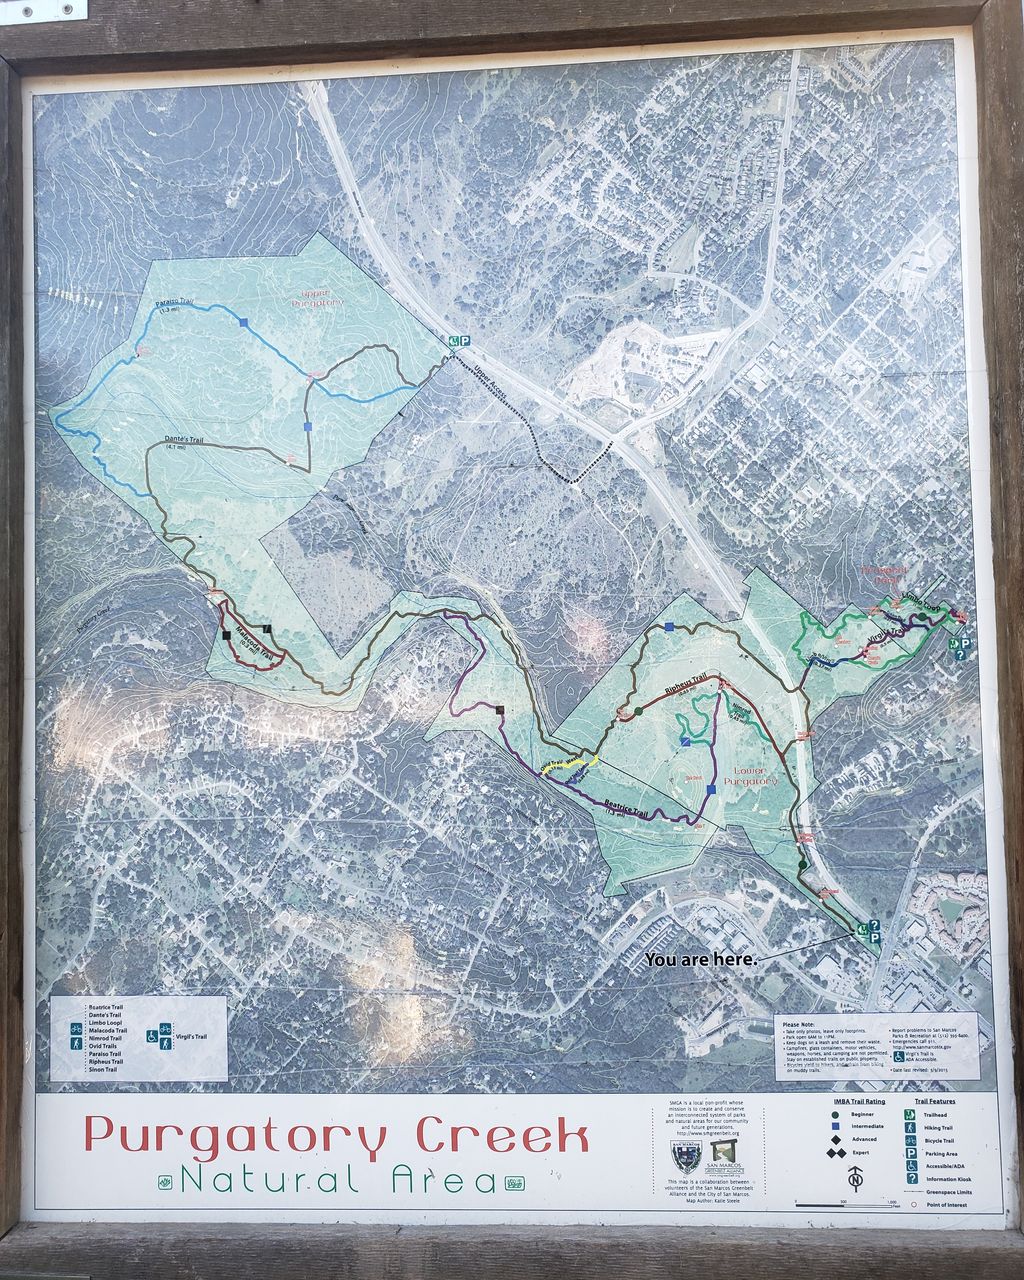 Purgatory Creek Natural Area